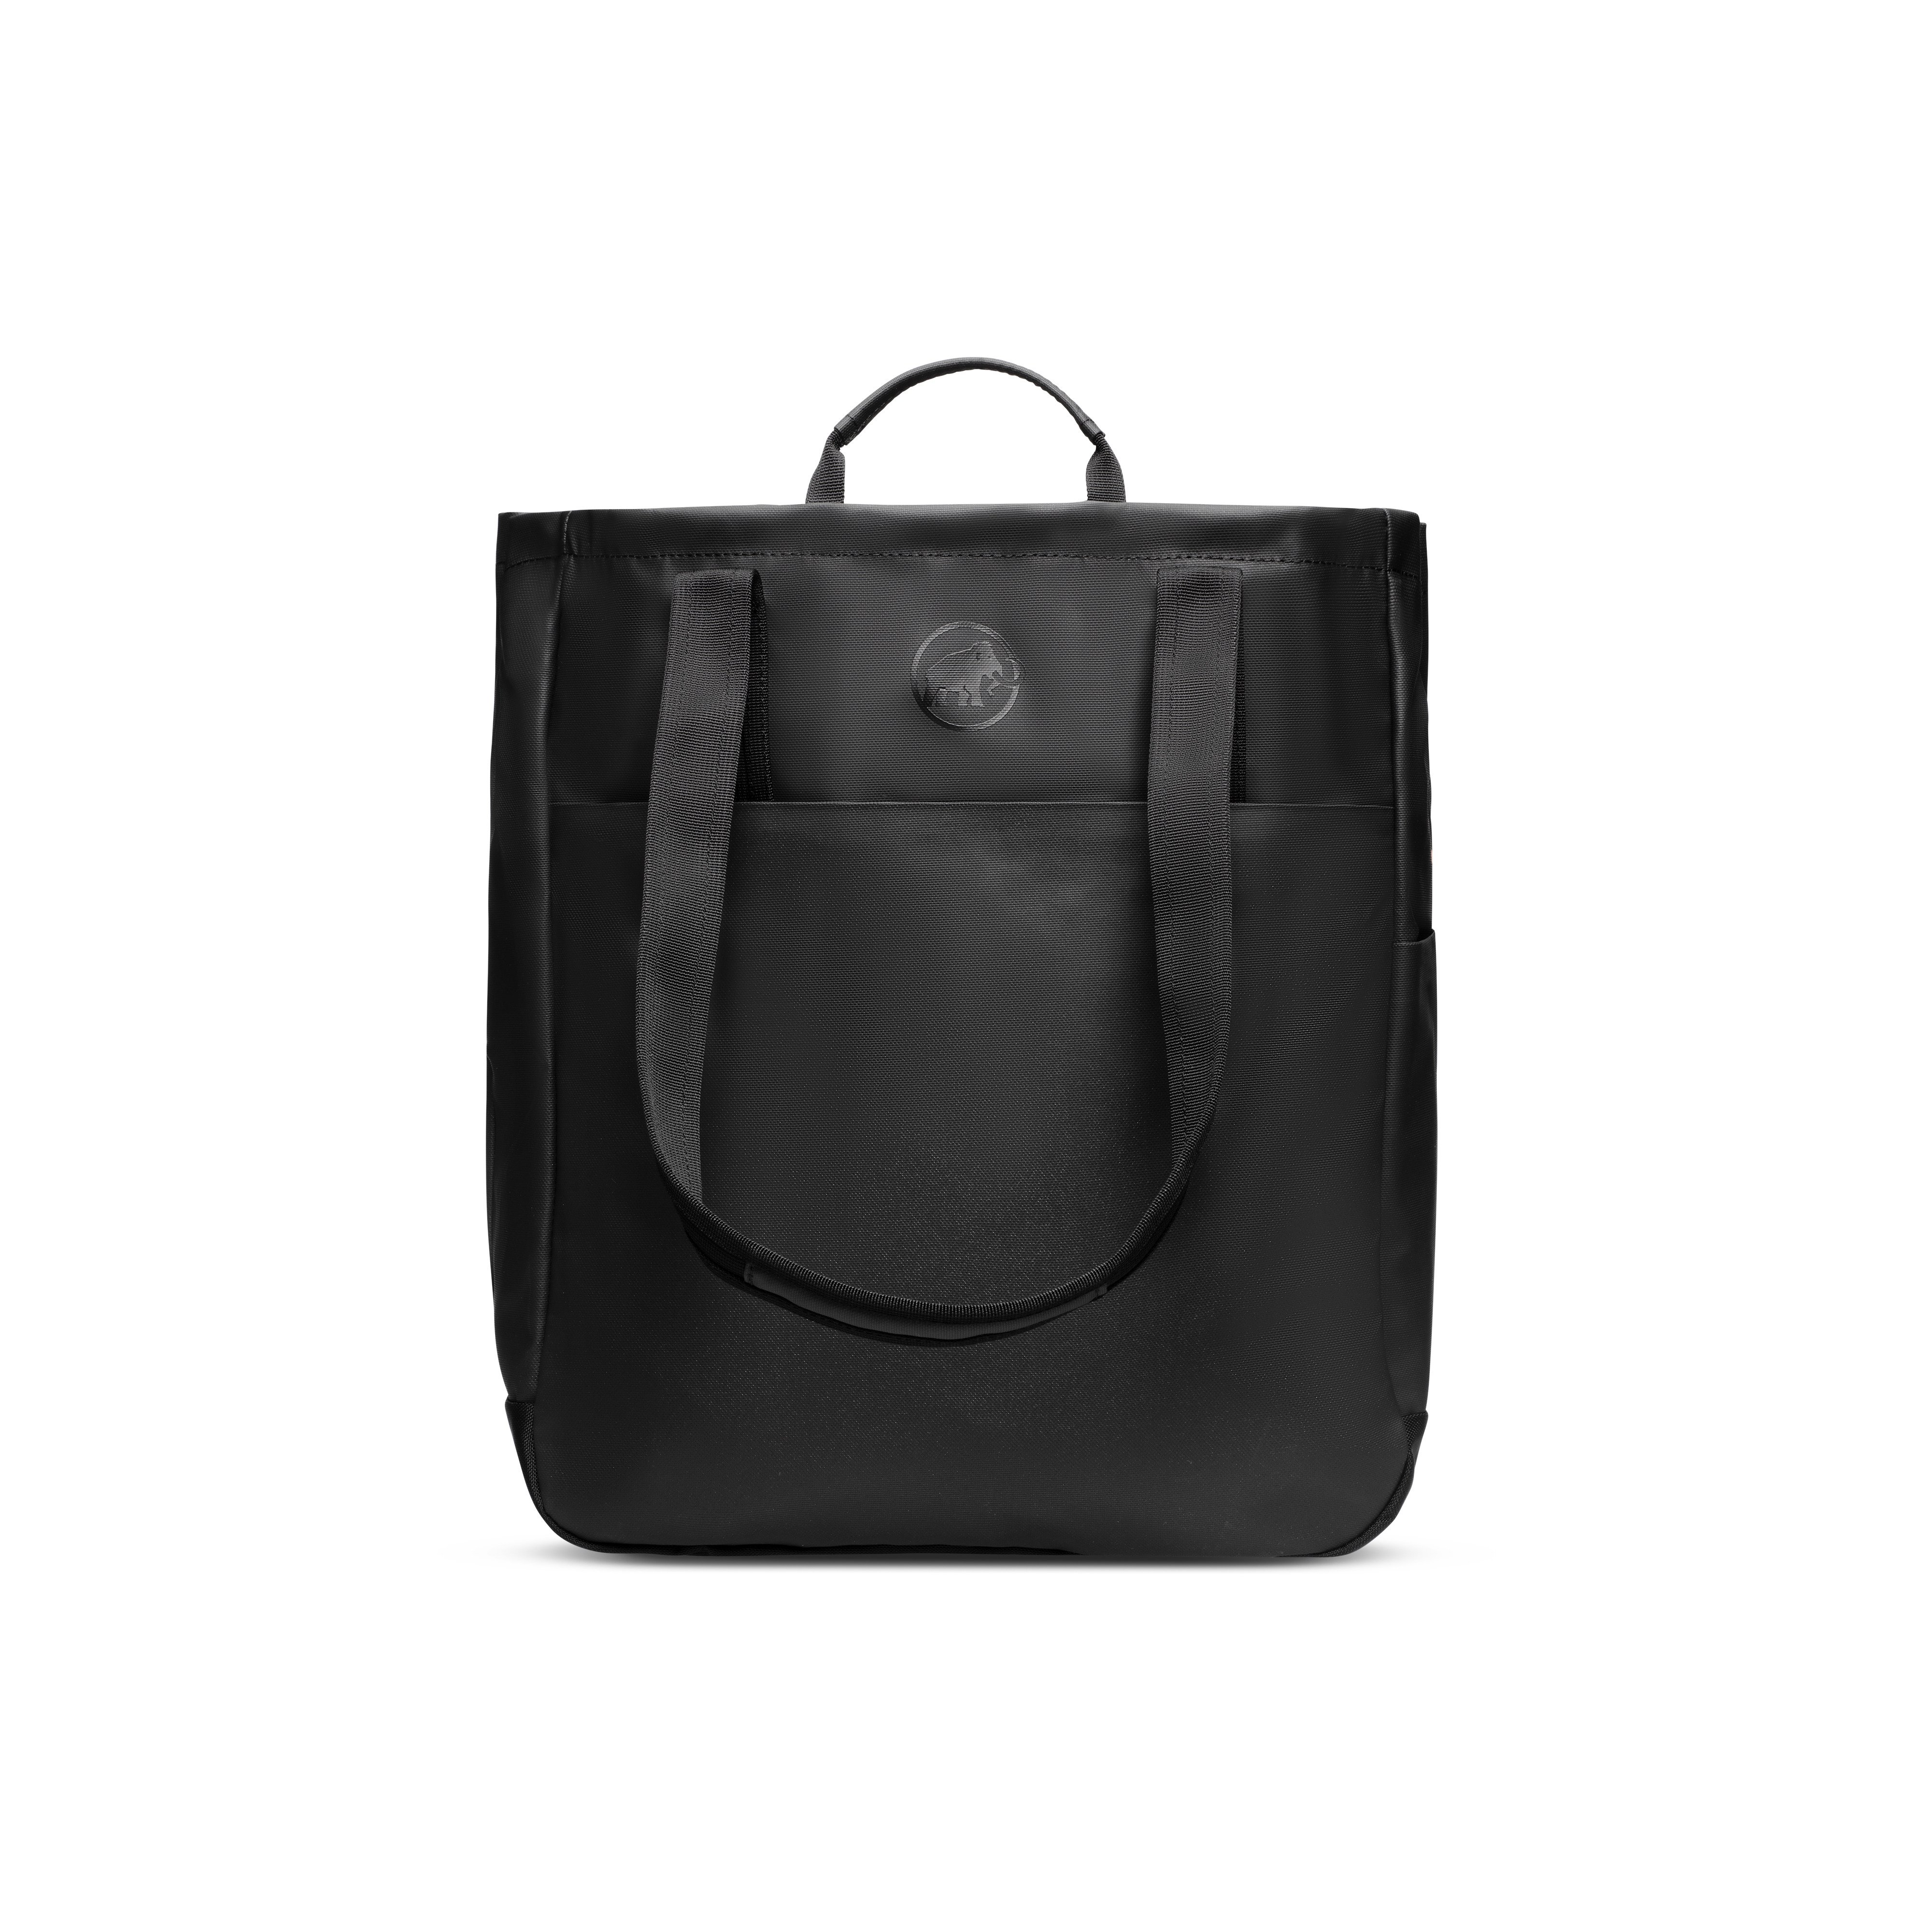 Seon Tote Bag - black, 15 L product image